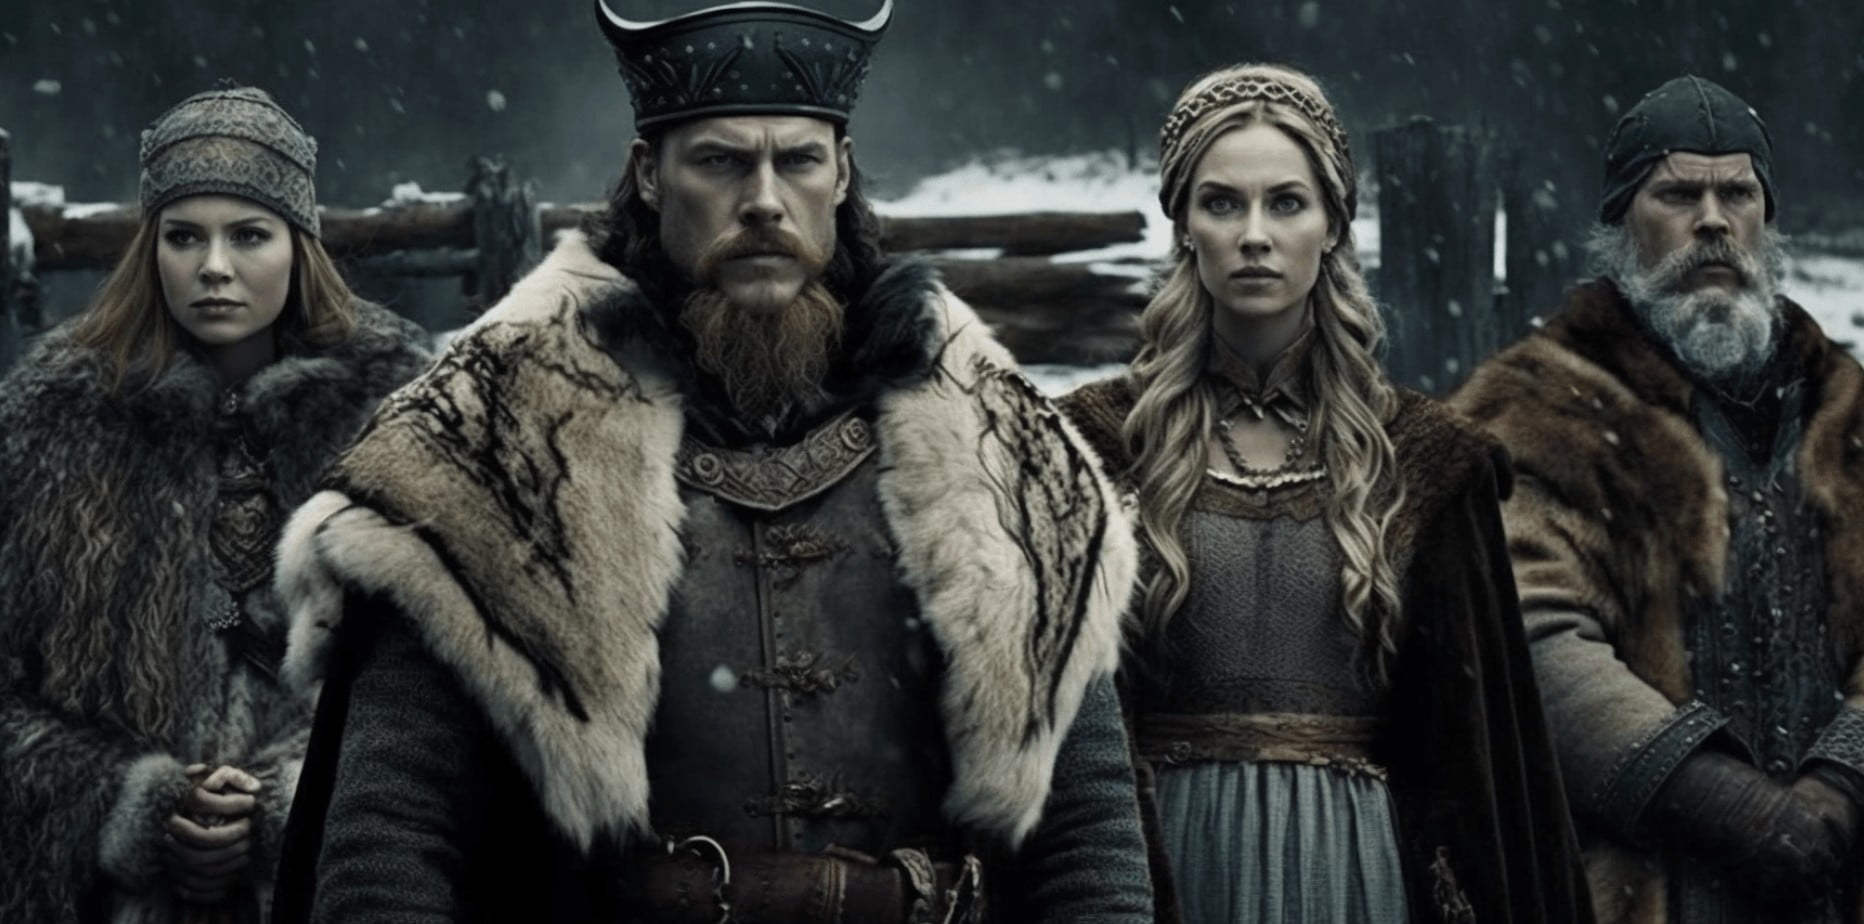 Bjorn Lothbrok: The Legendary Viking Hero and Explorer - Viking Style